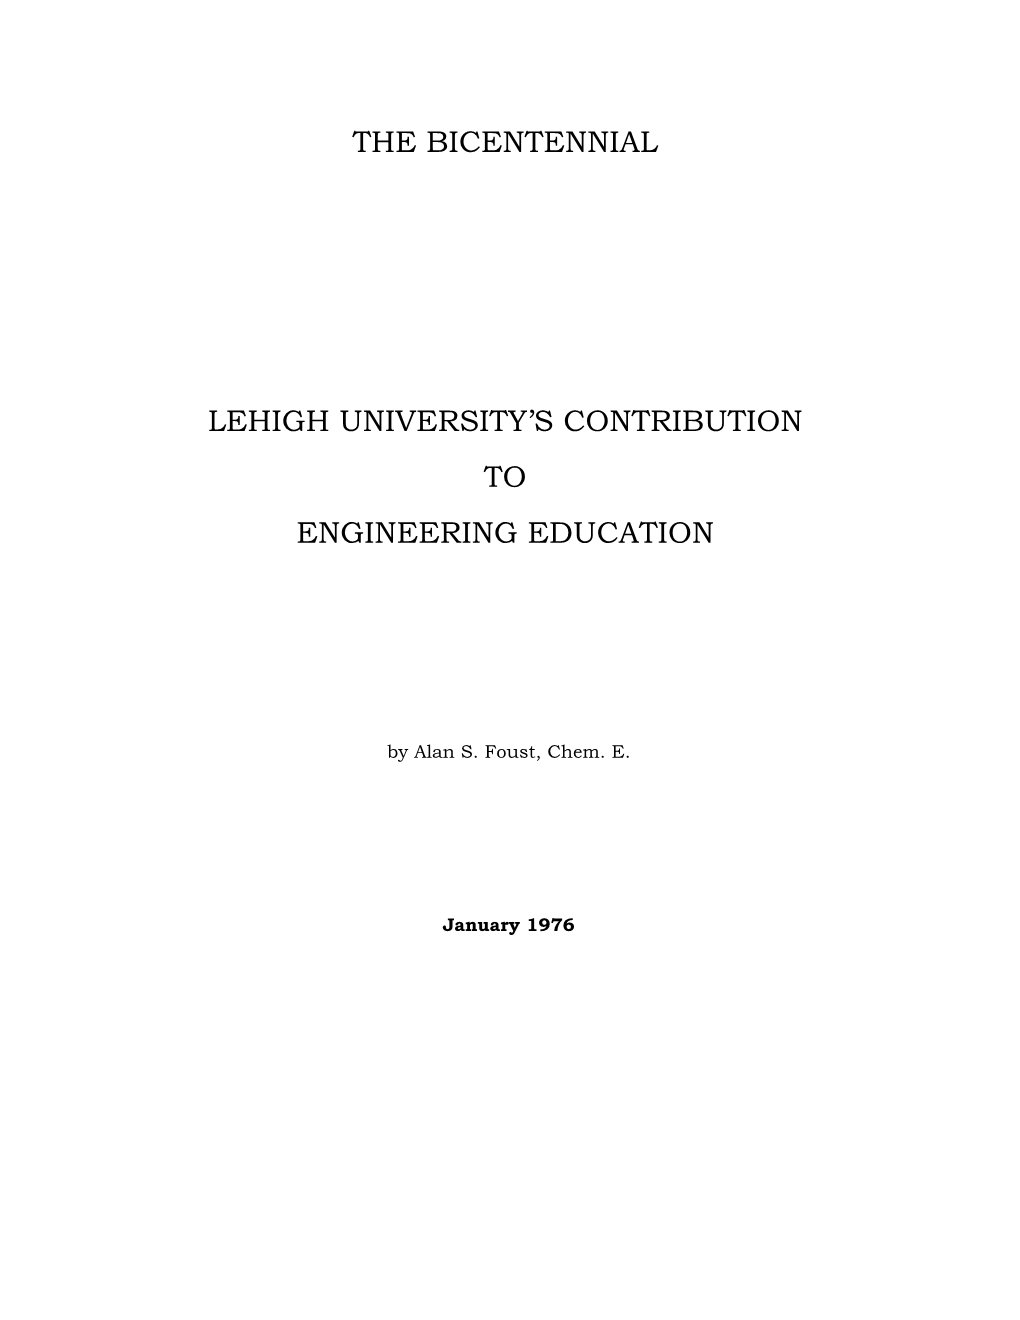 The Bicentennial: Lehigh University's Contribution to Engineering